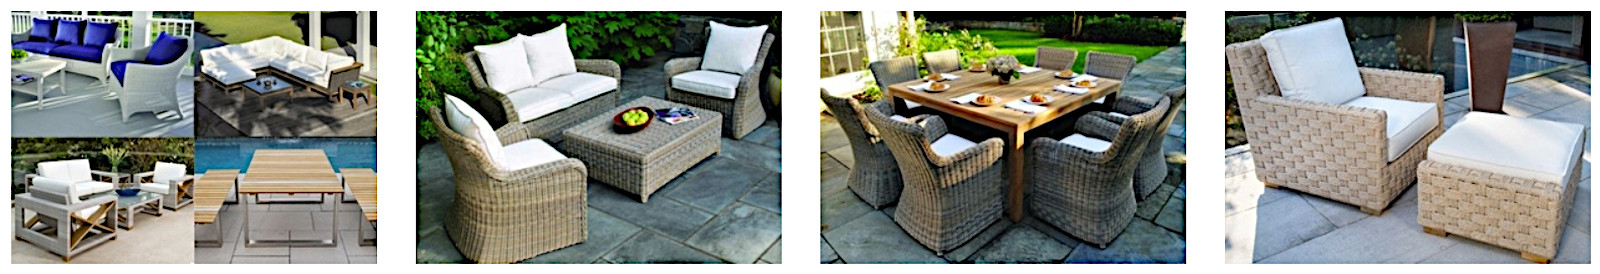 Kingsley Bate teak garden furniture discounted